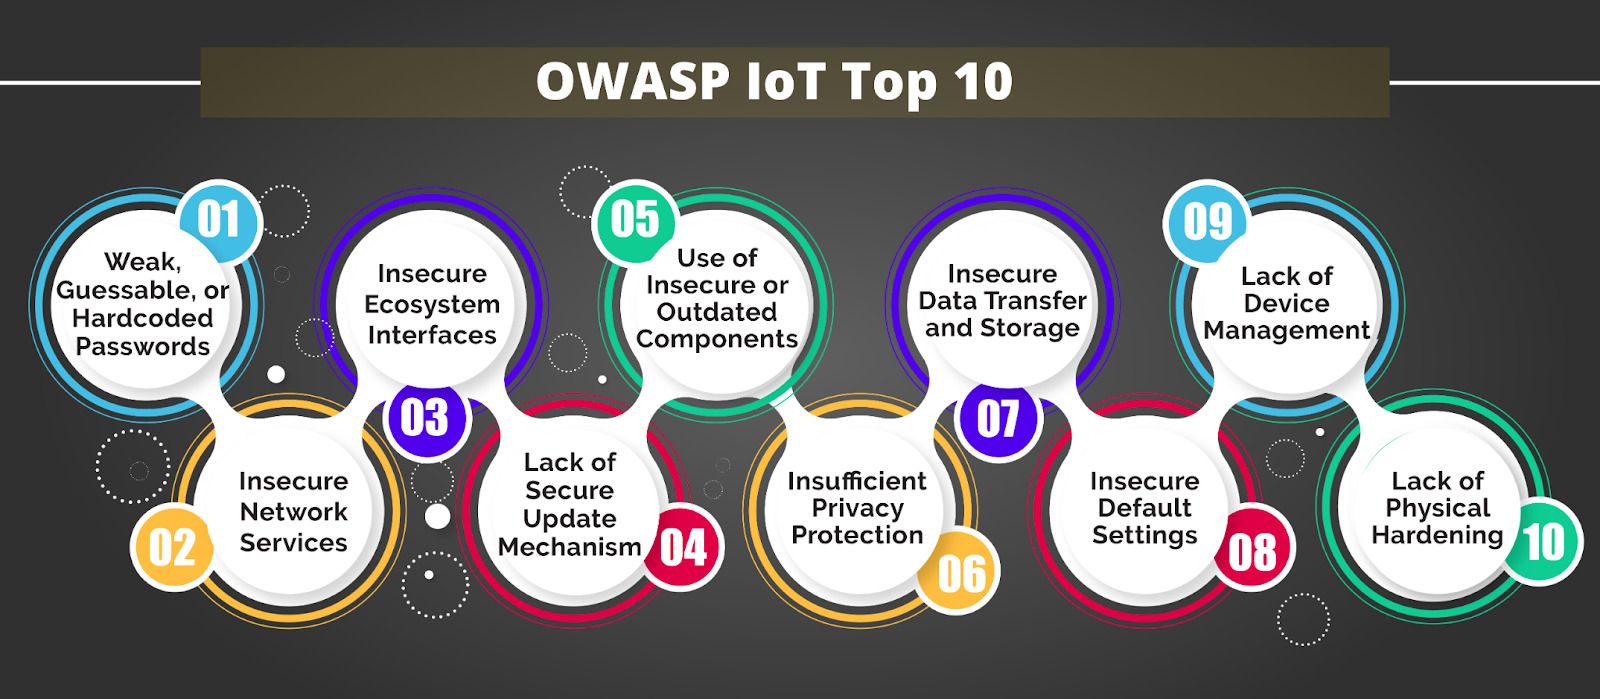 OWASP IoT Top 10 Project